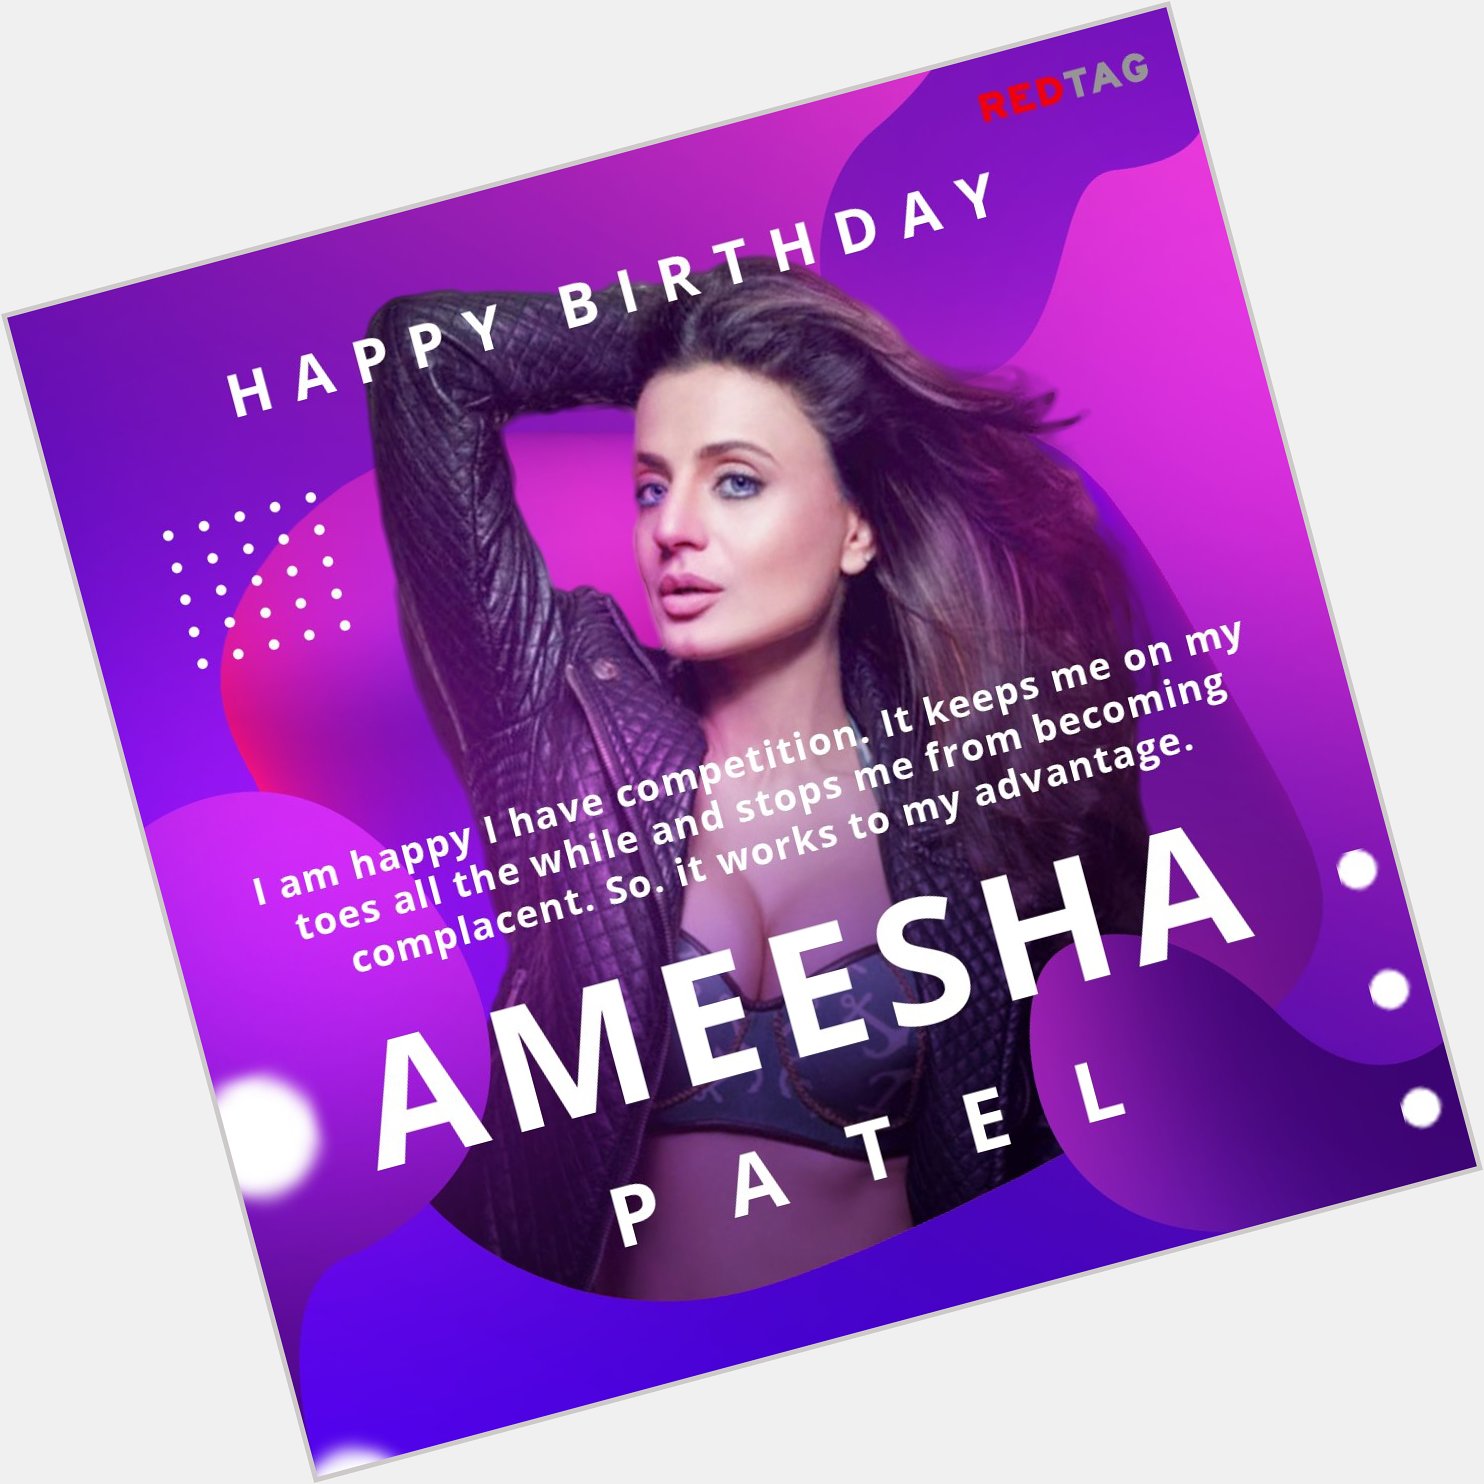 Wishing the Ameesha Patel, a very happy birthday! 